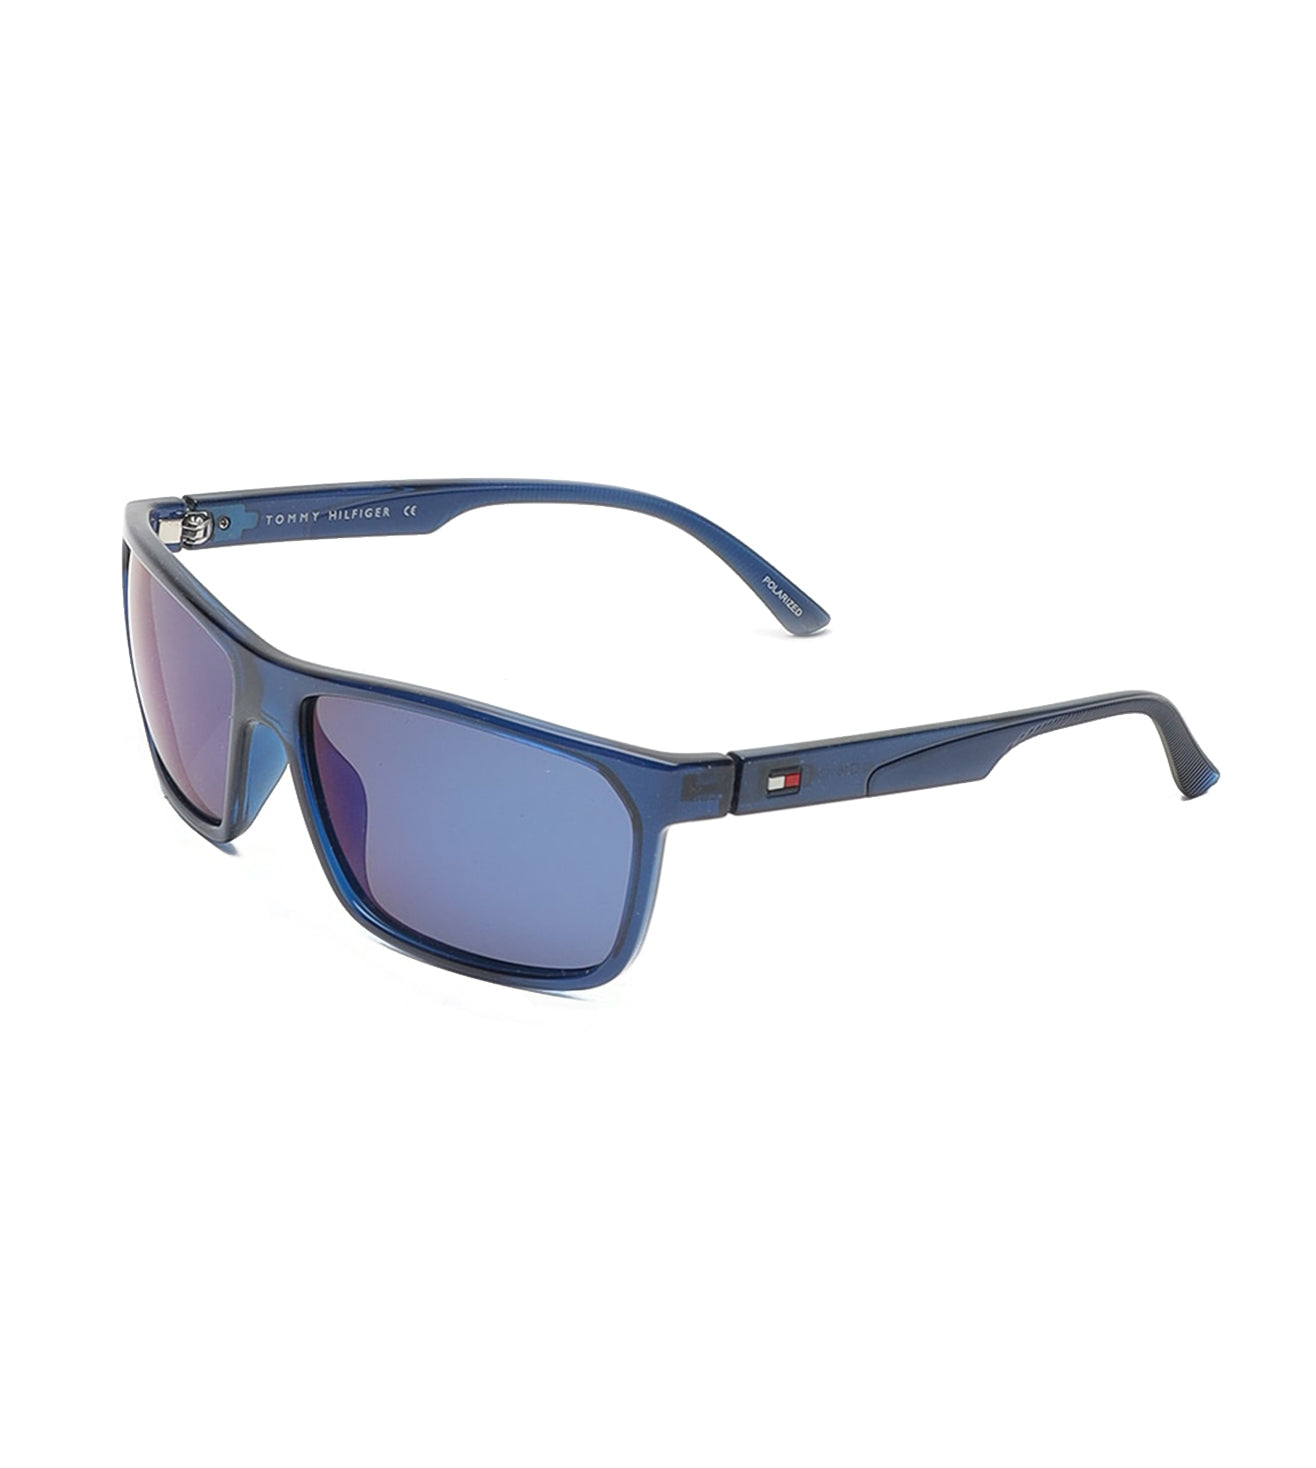 Tommy Hilfiger Men's Blue-mirrored Rectangular Sunglasses